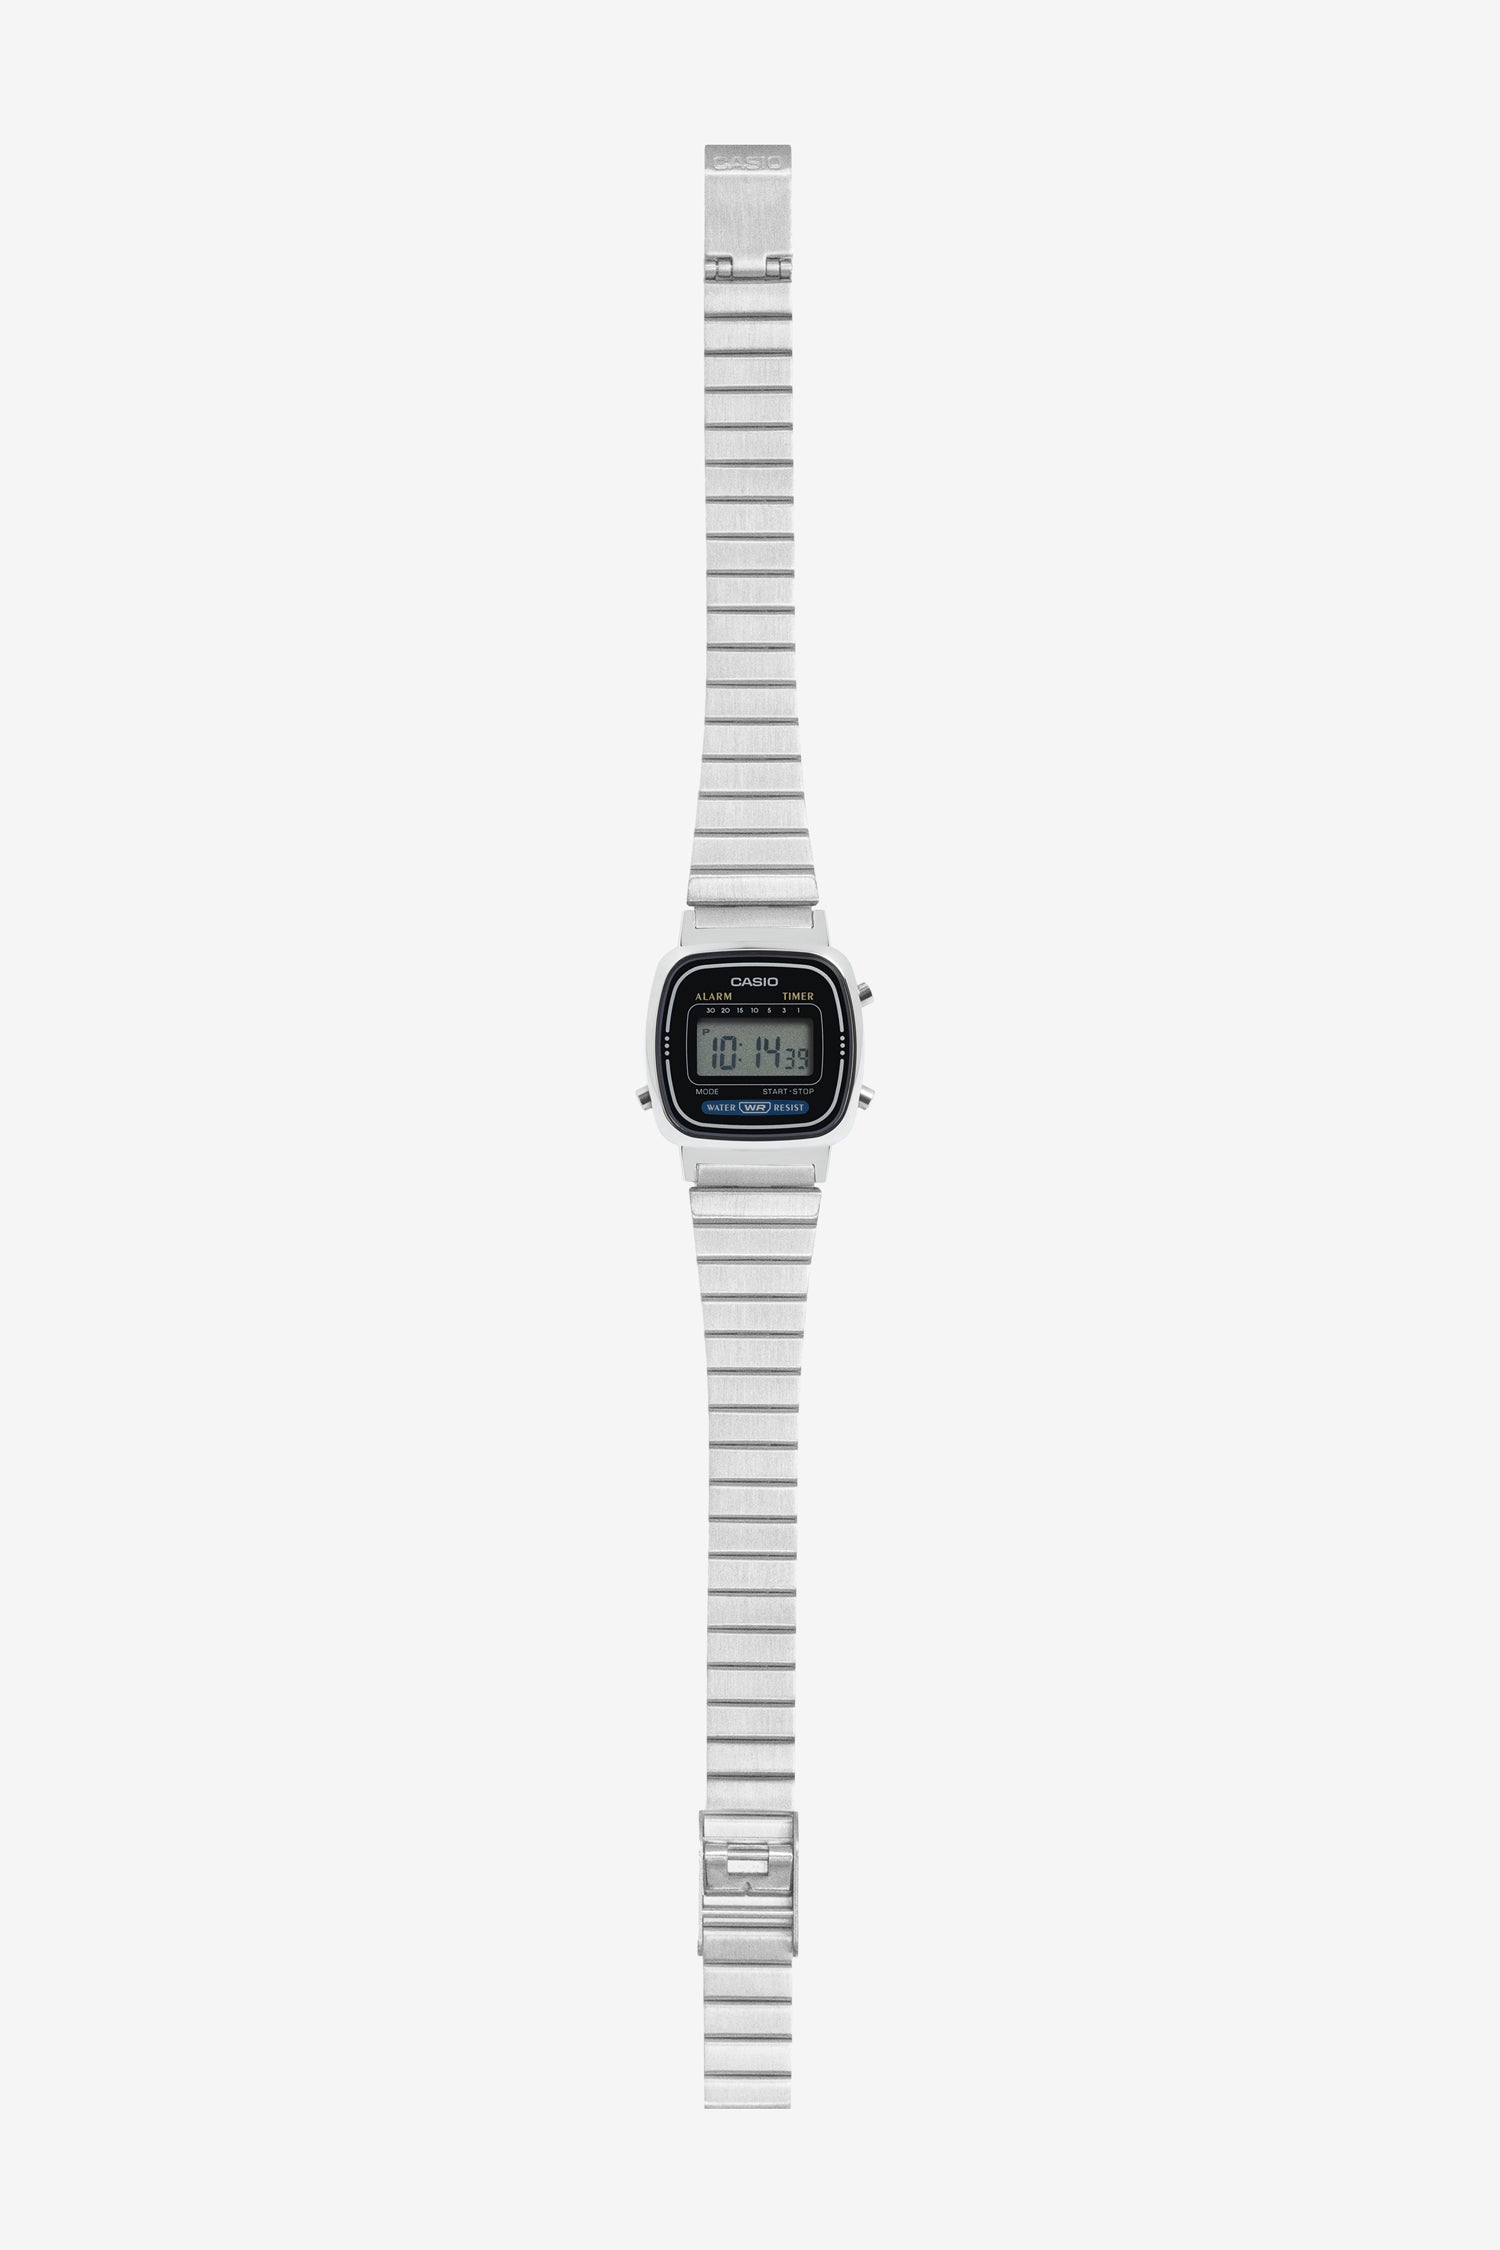 WCHD670W - Vintage Sporty Unisex Casio Watch